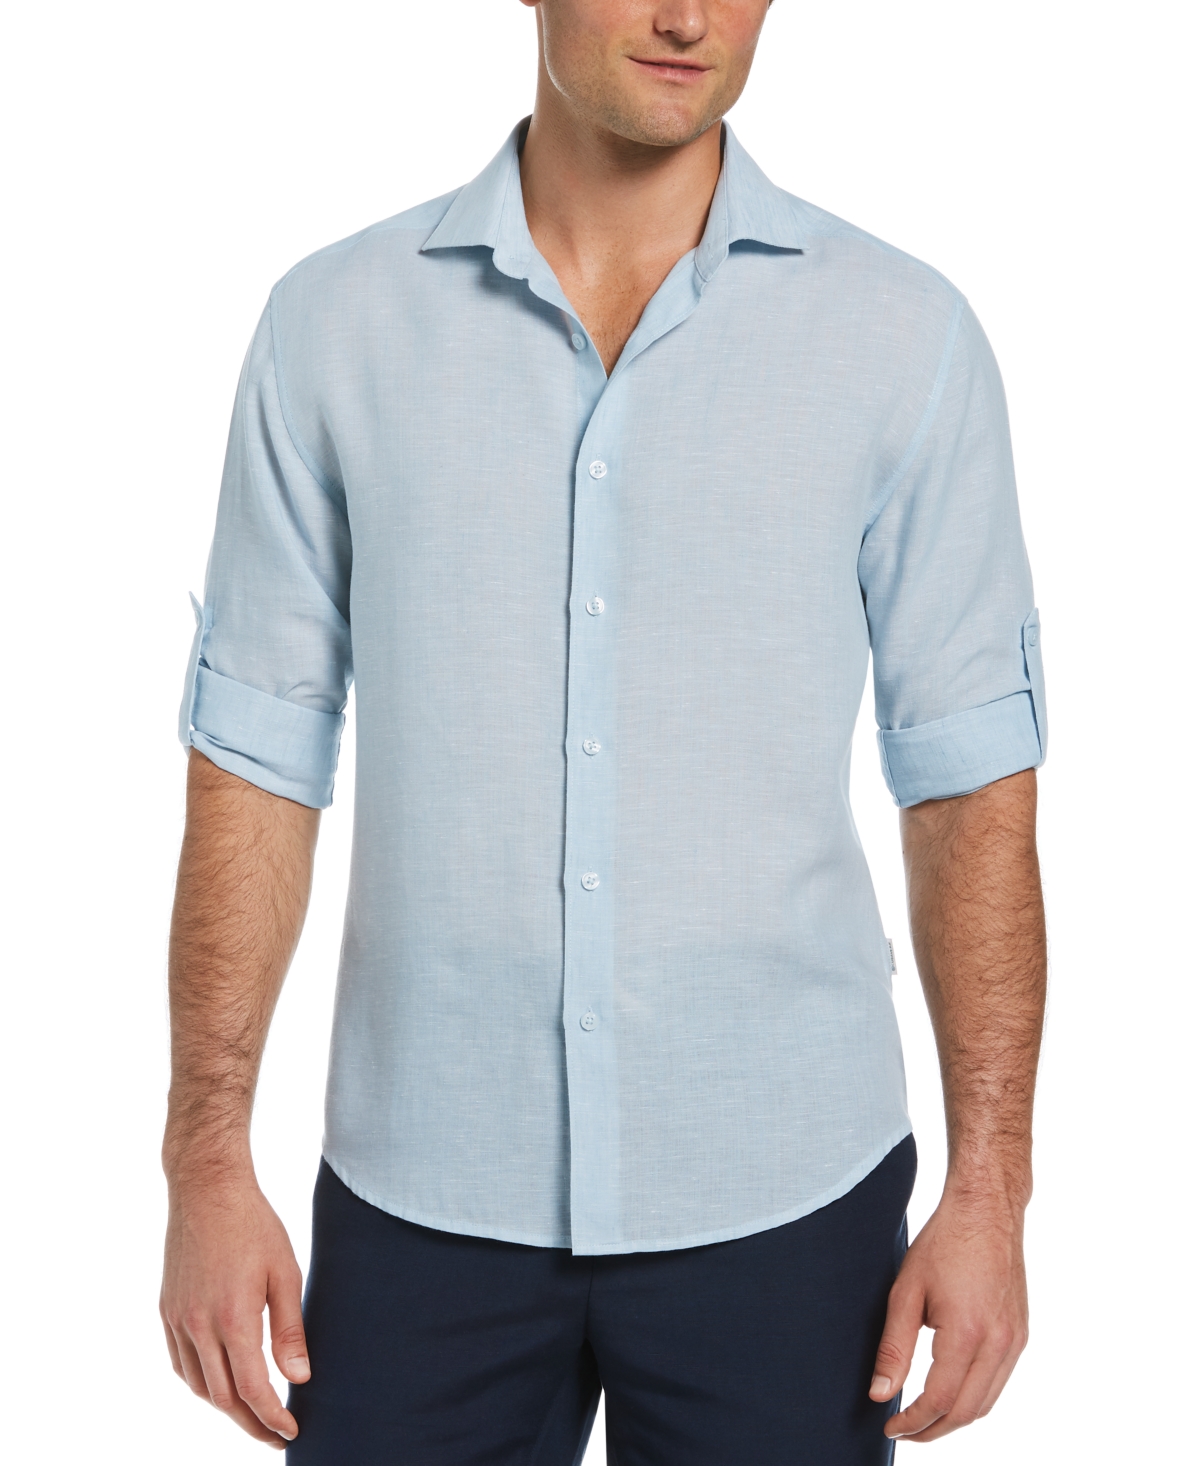 Men's Travelselect Linen Blend Wrinkle-Resistant Shirt - Cerulean